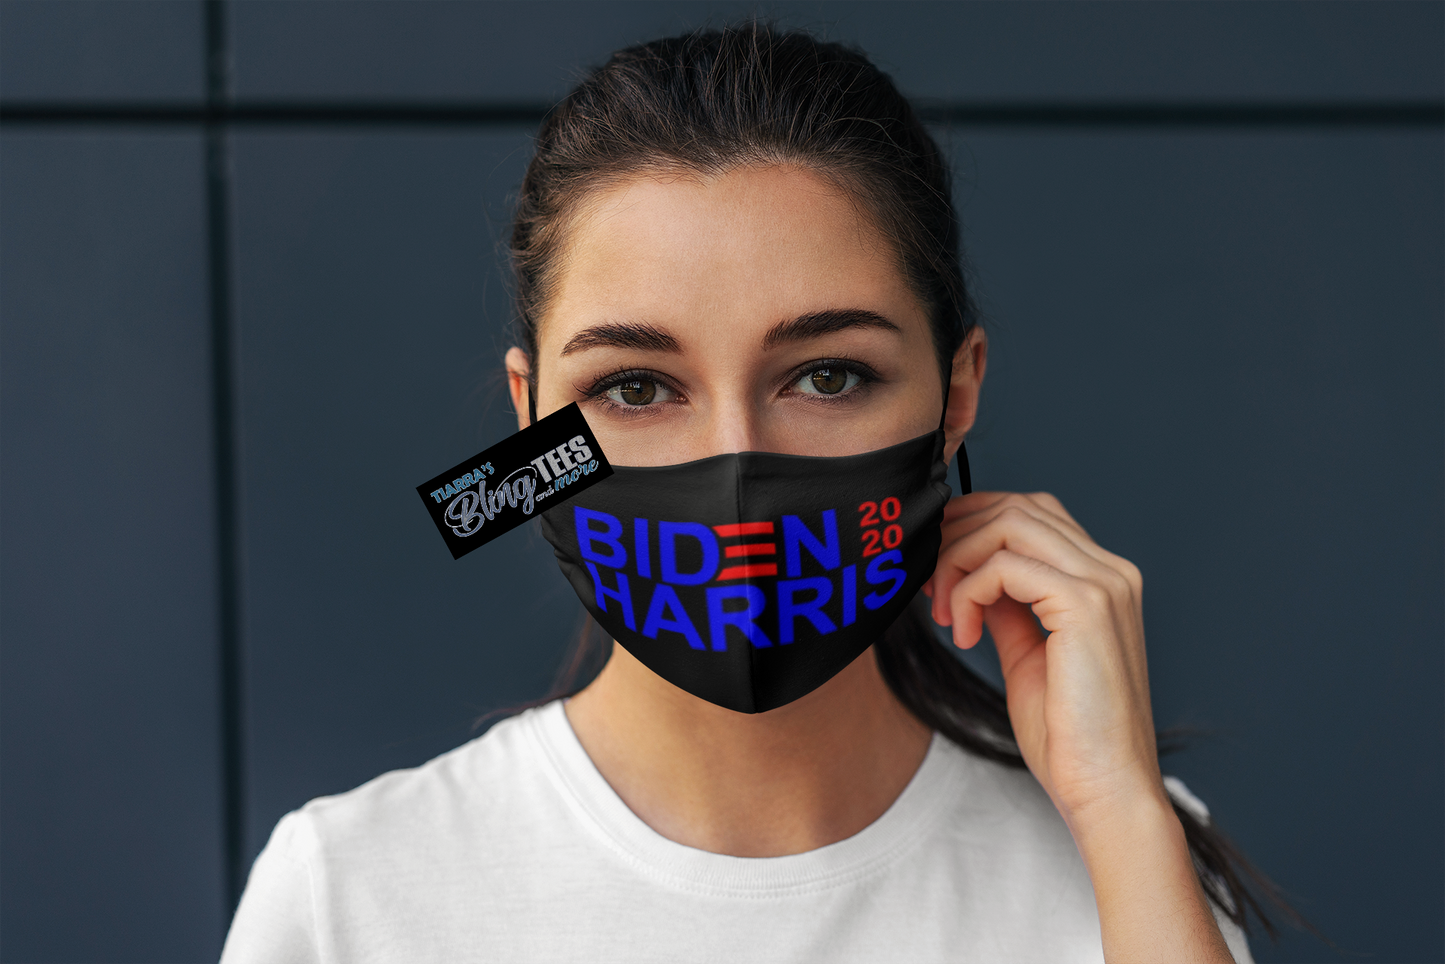 Biden/Harris 2020 Face Masks